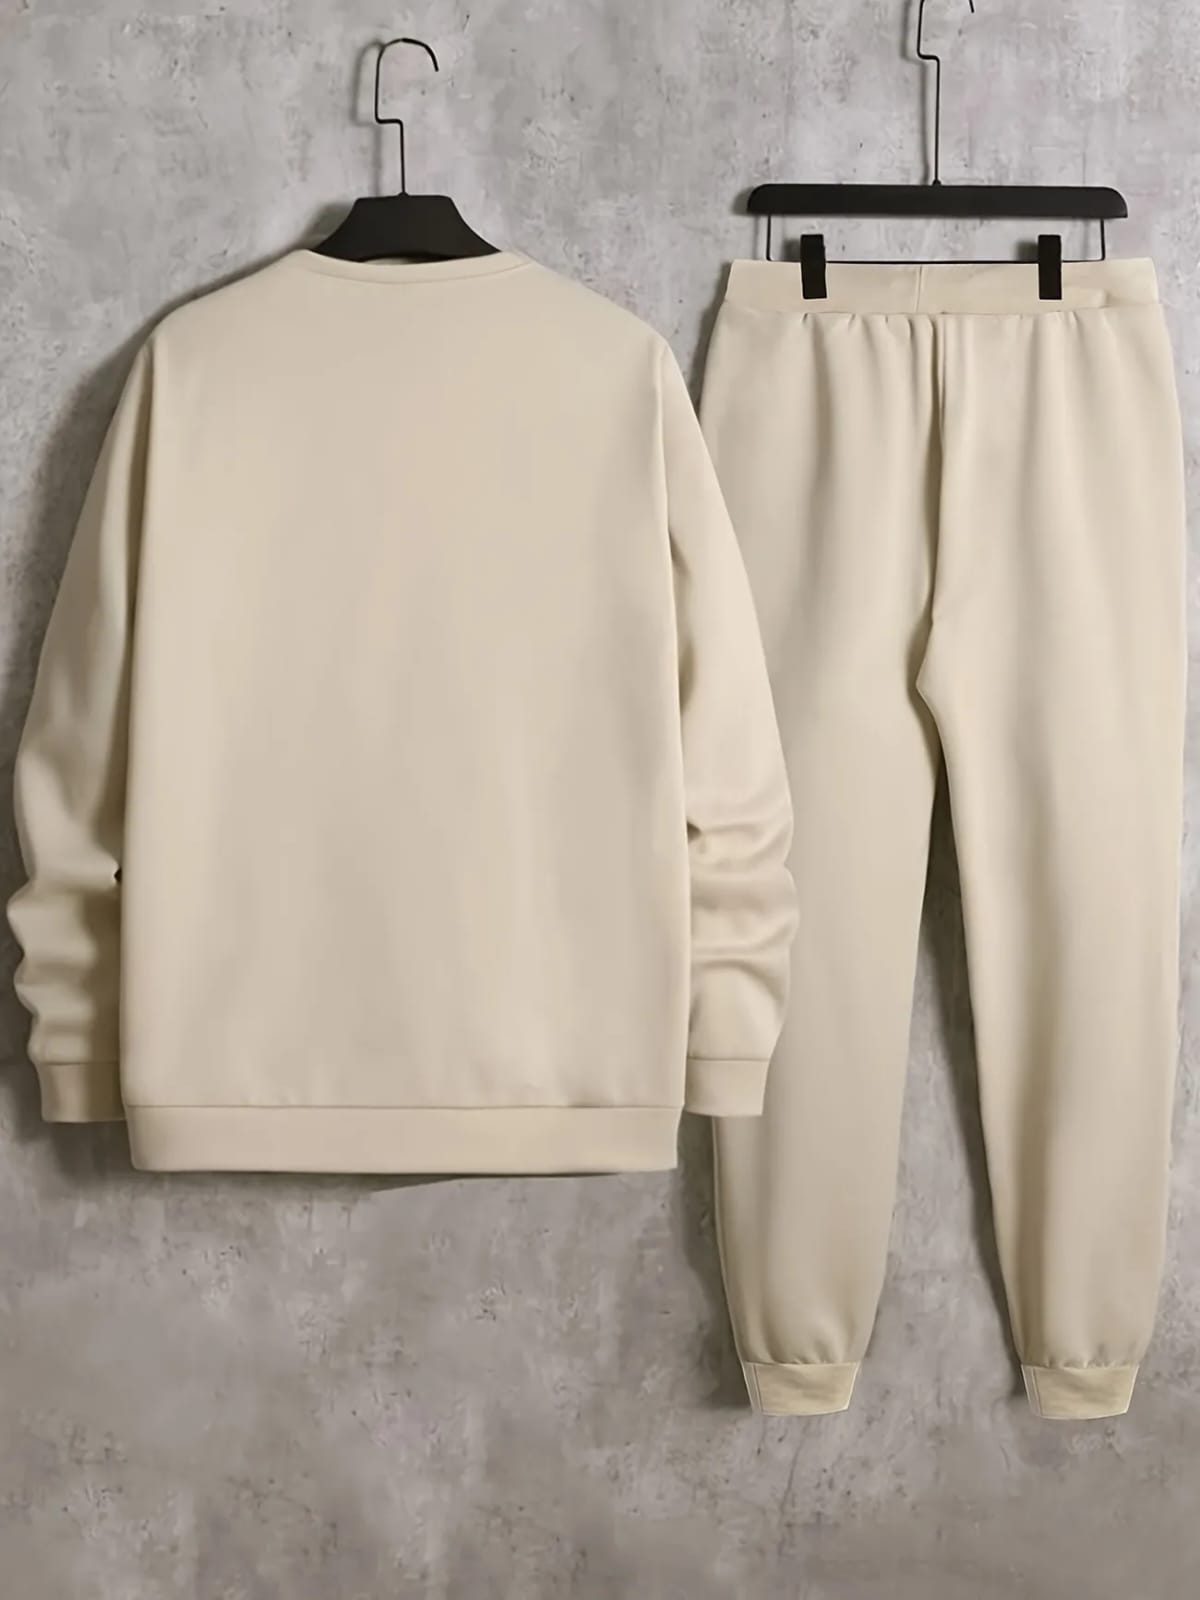 Mens Sweatshirt and Pants Set by Tee Tall - MSPSTT4 - Cream Cream